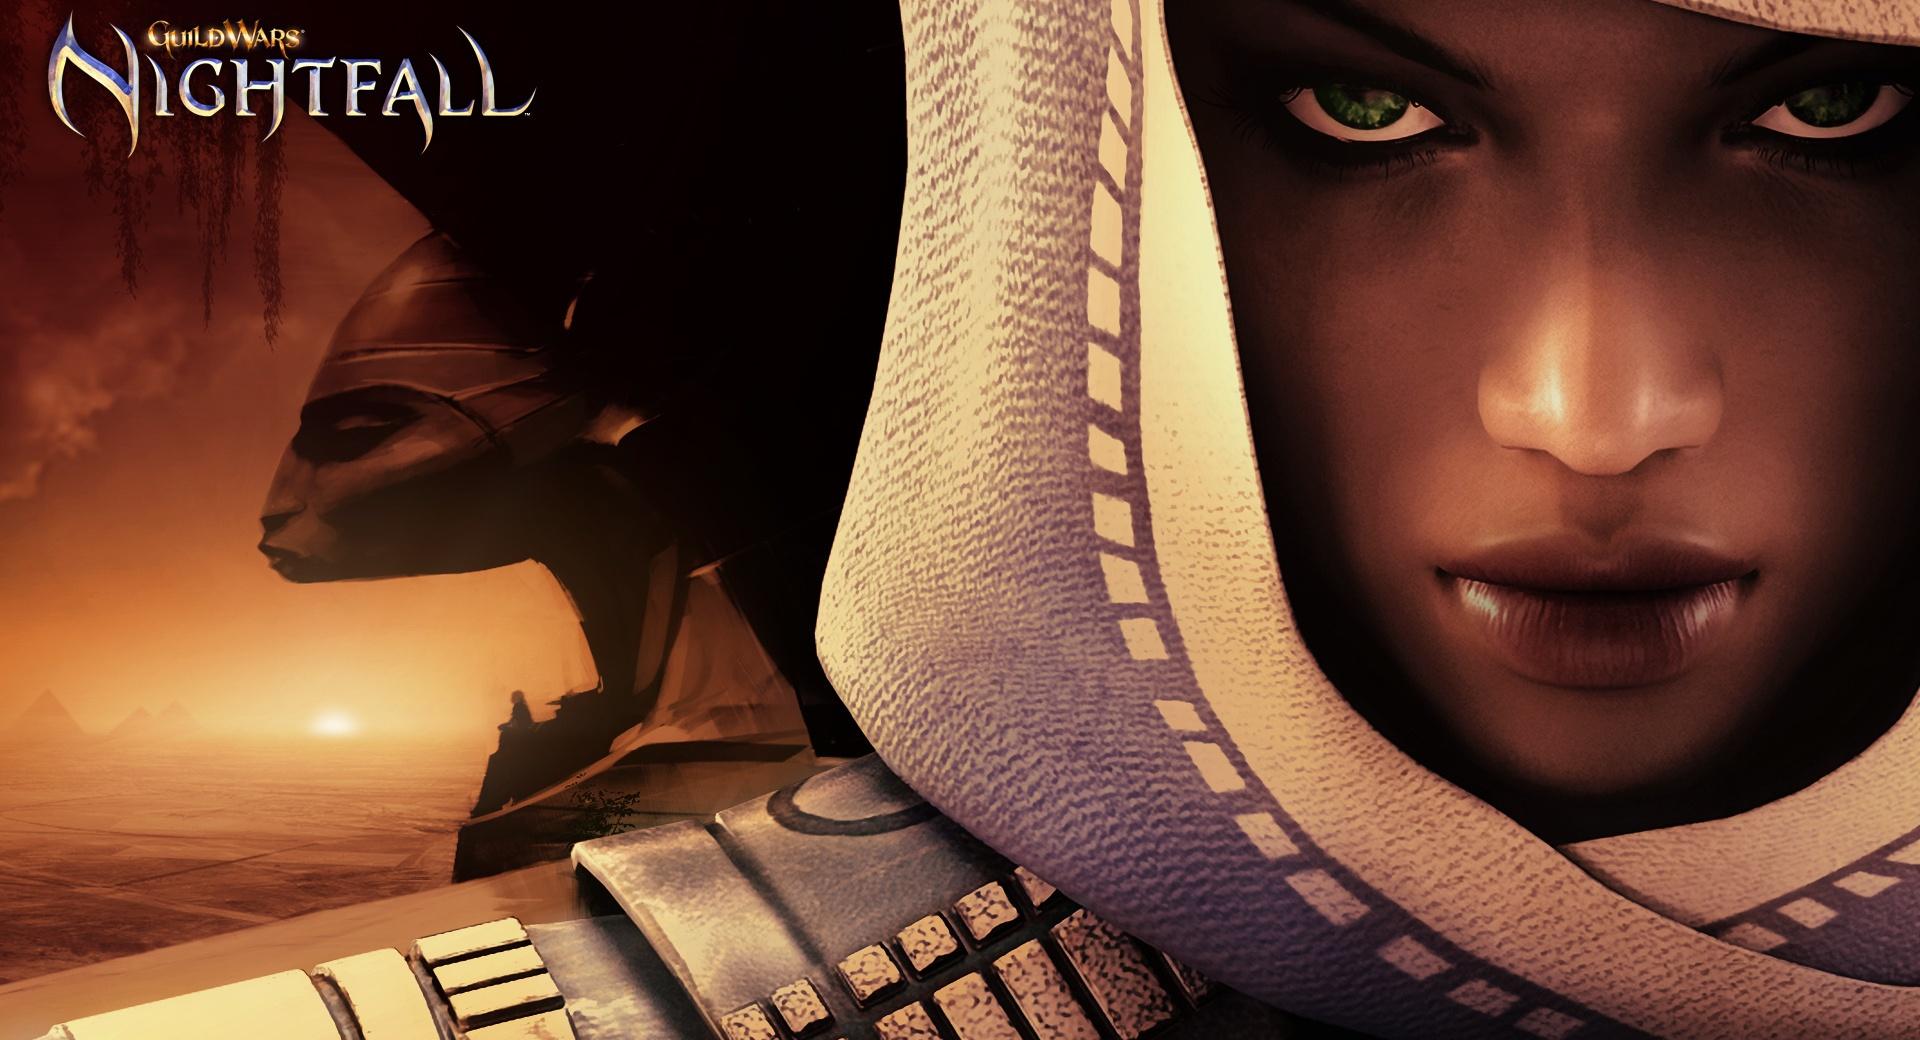 Guild Wars Nightfall - Dervish Closeup at 1280 x 960 size wallpapers HD quality